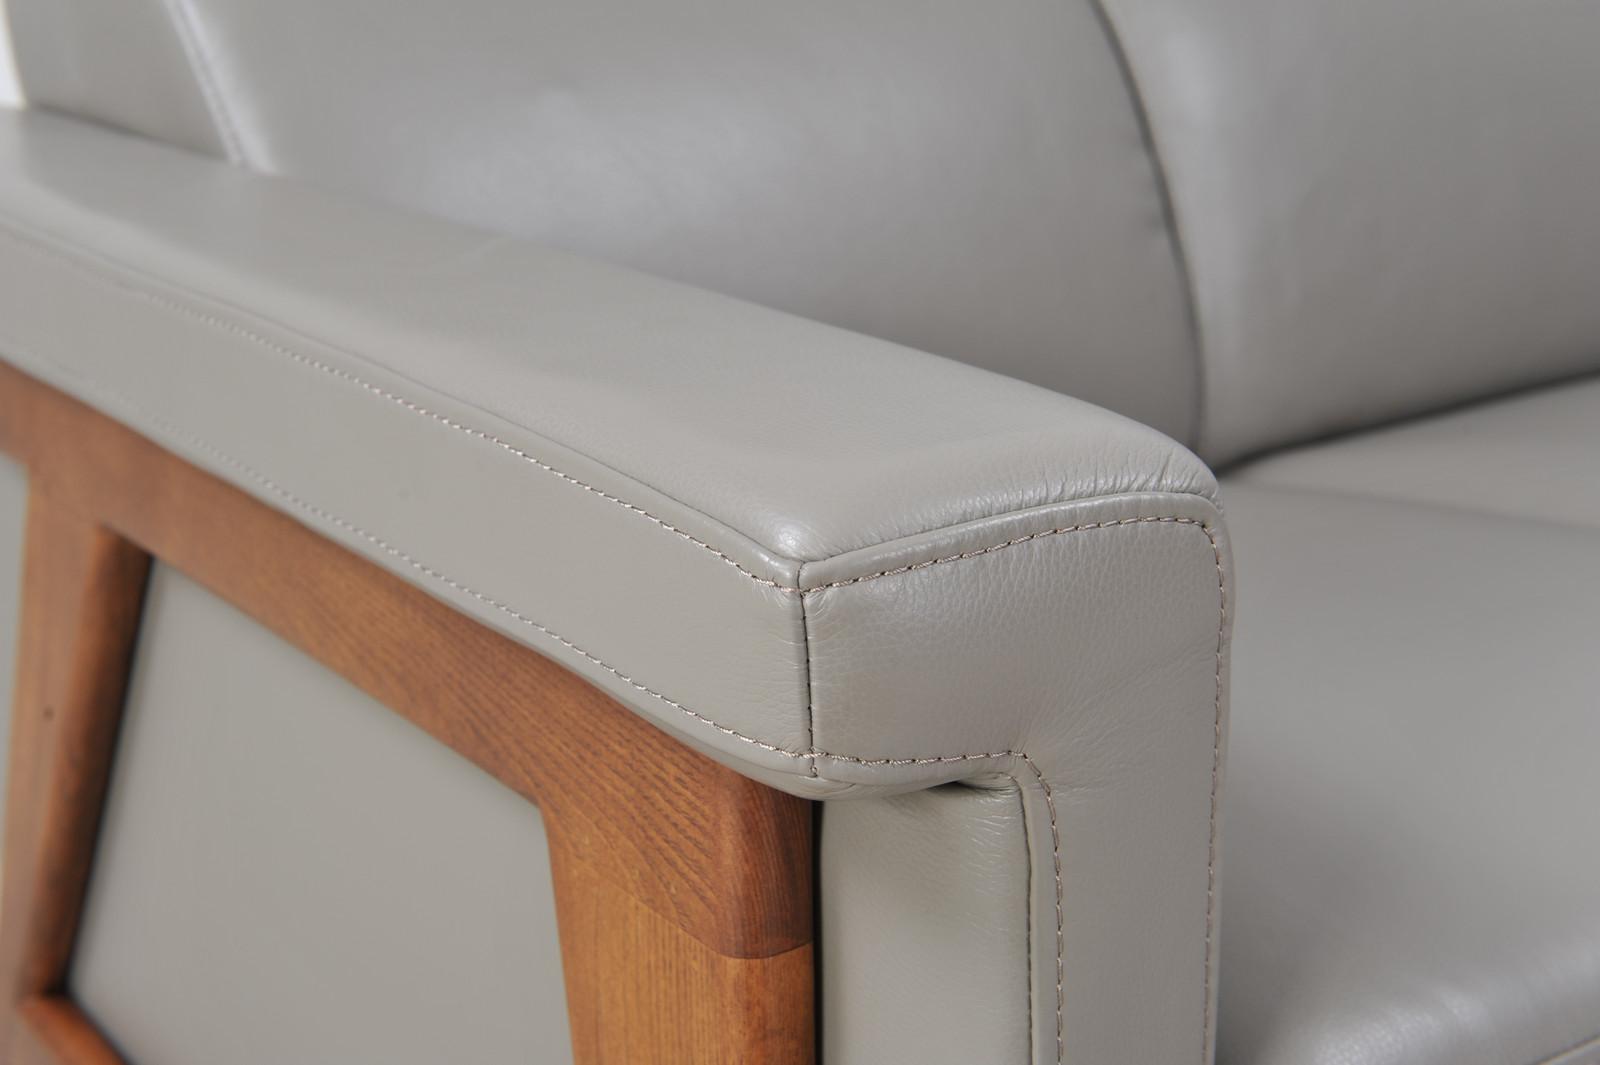 

                    
Moroni Harvard 579 Reclining Chair Gray Top grain leather Purchase 
